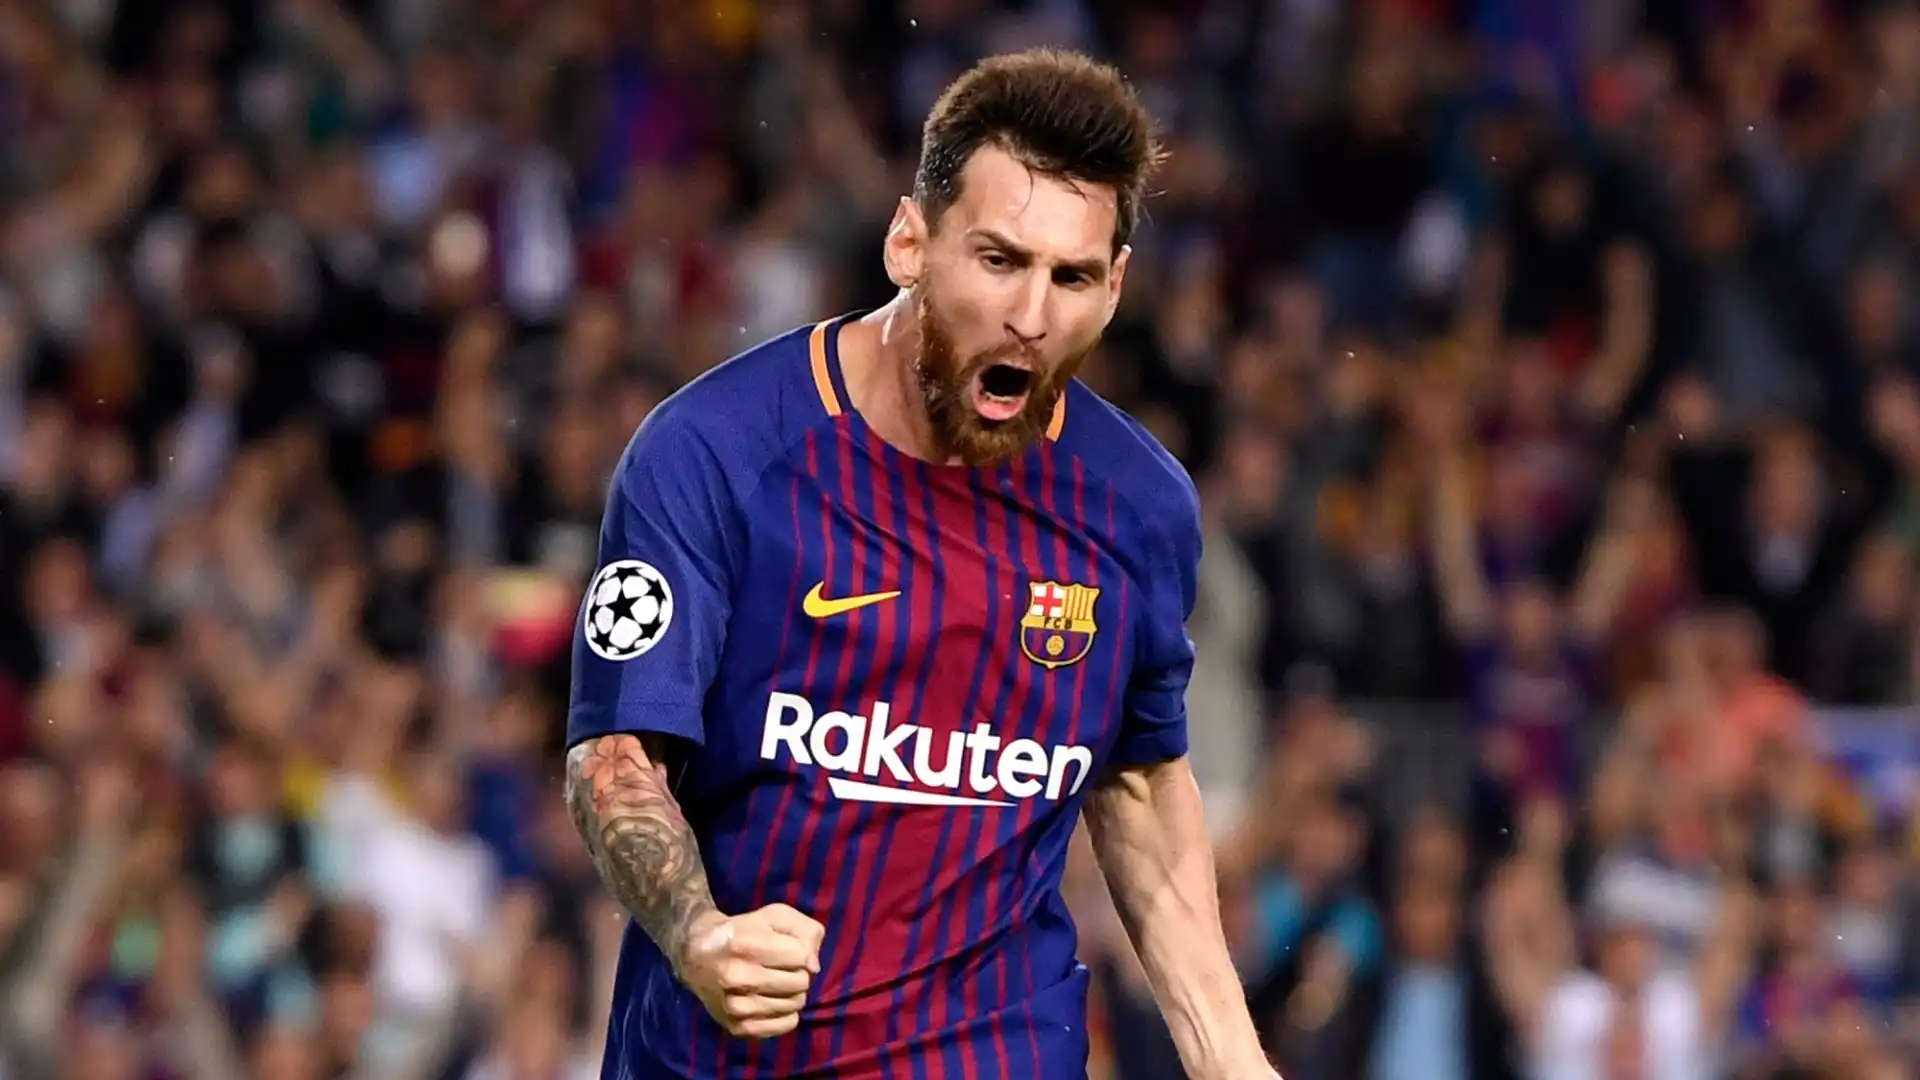 7 Lionel Messi (Calcio): 1,48 miliardi di dollari